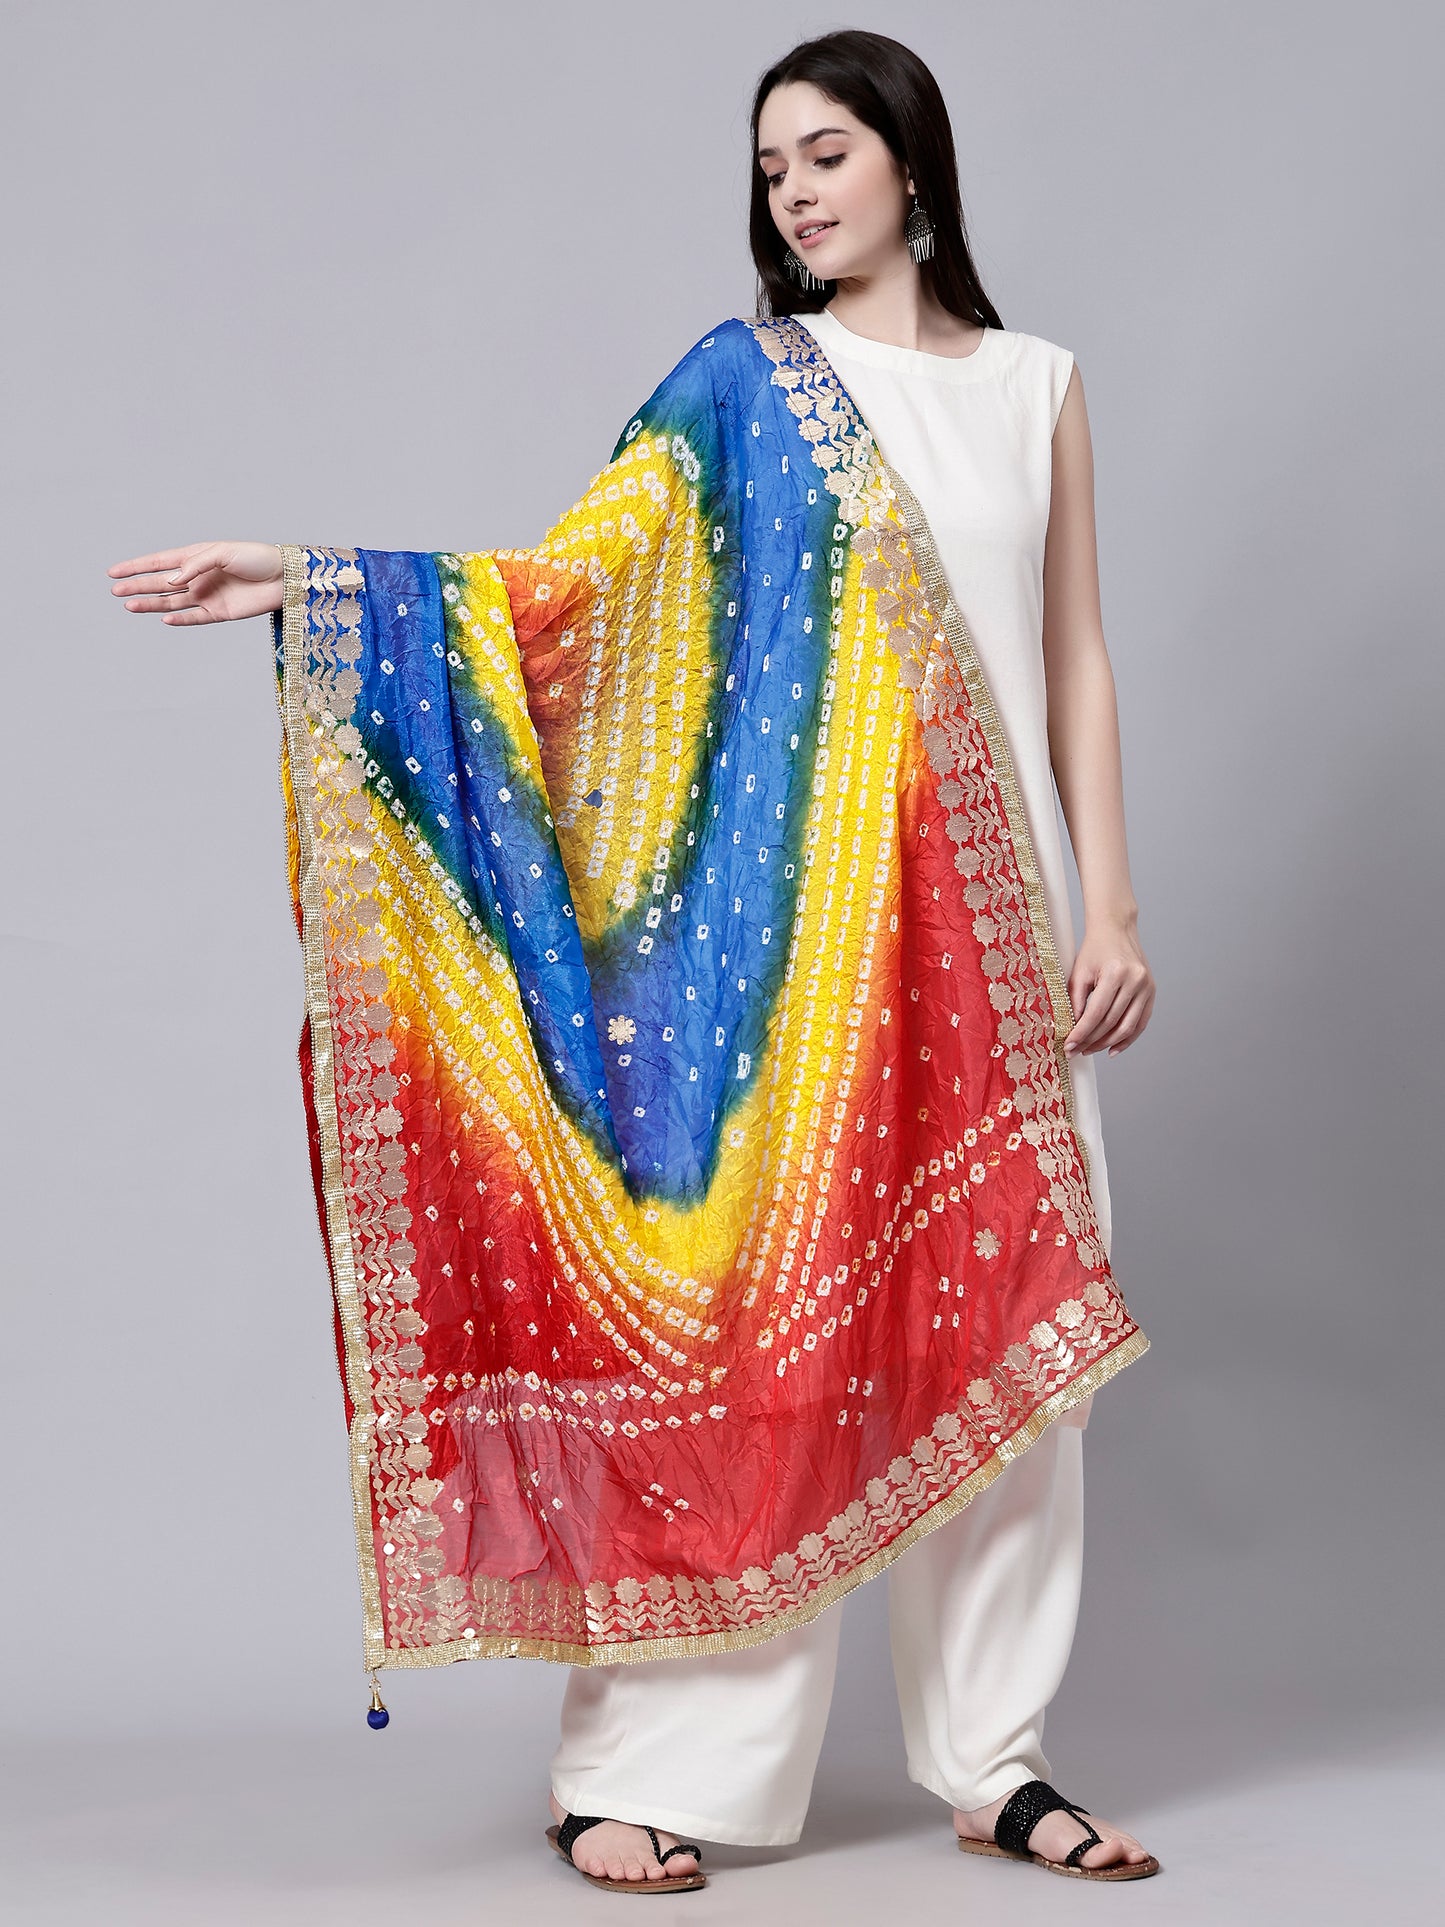 Jaipuri Bandhani Tie-Dye Polka-dot Print Dupatta with Golden Gotta Lace Border - Multi-Color